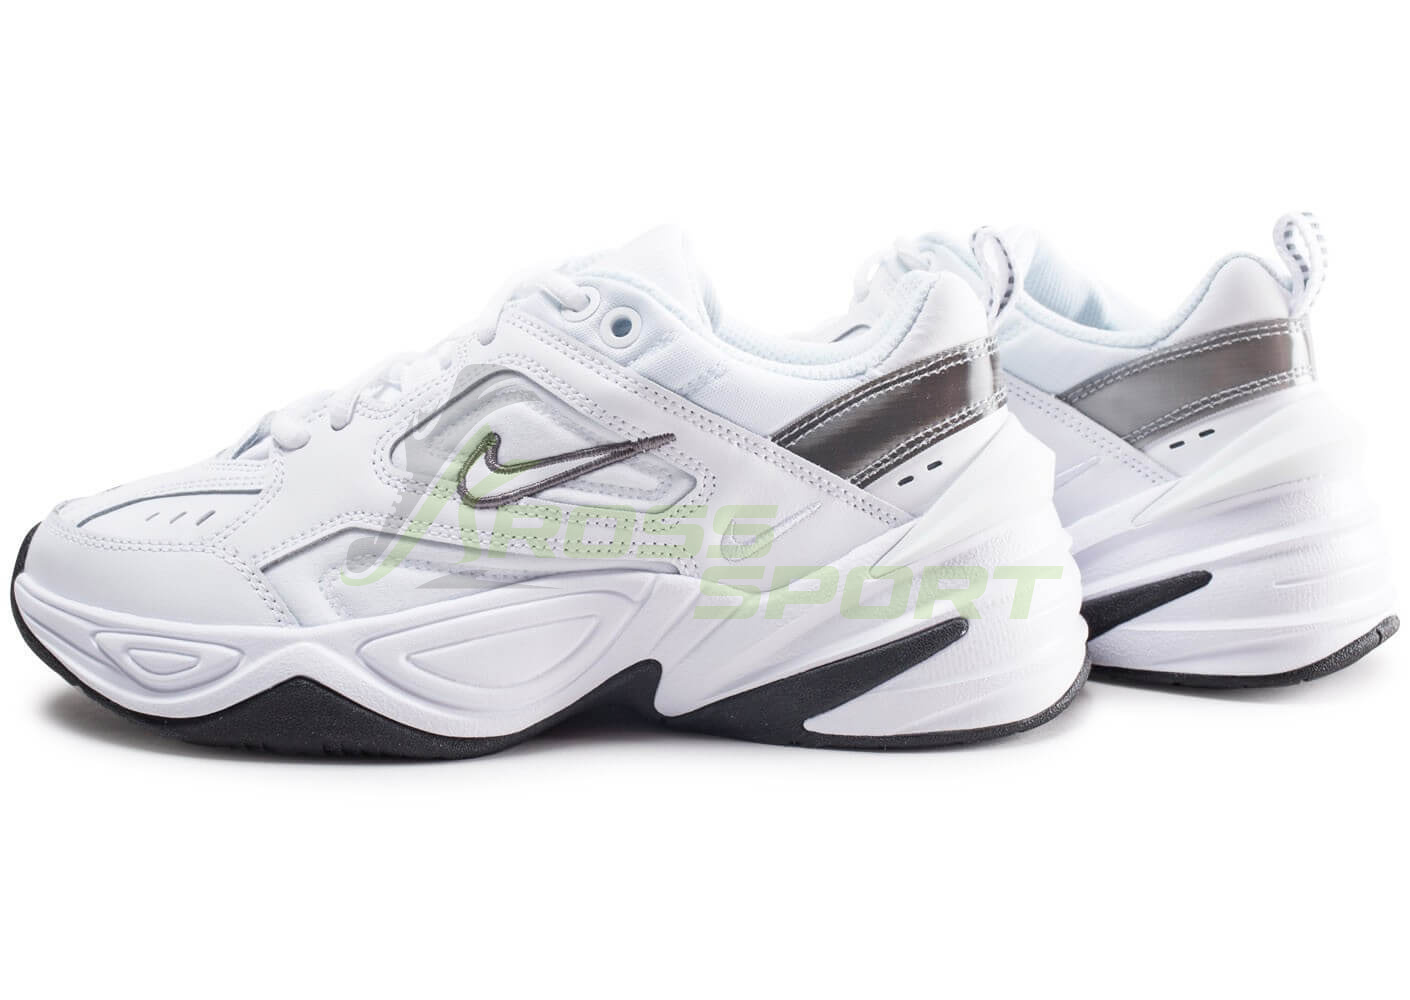  Nike M2k Tekno White/Grey